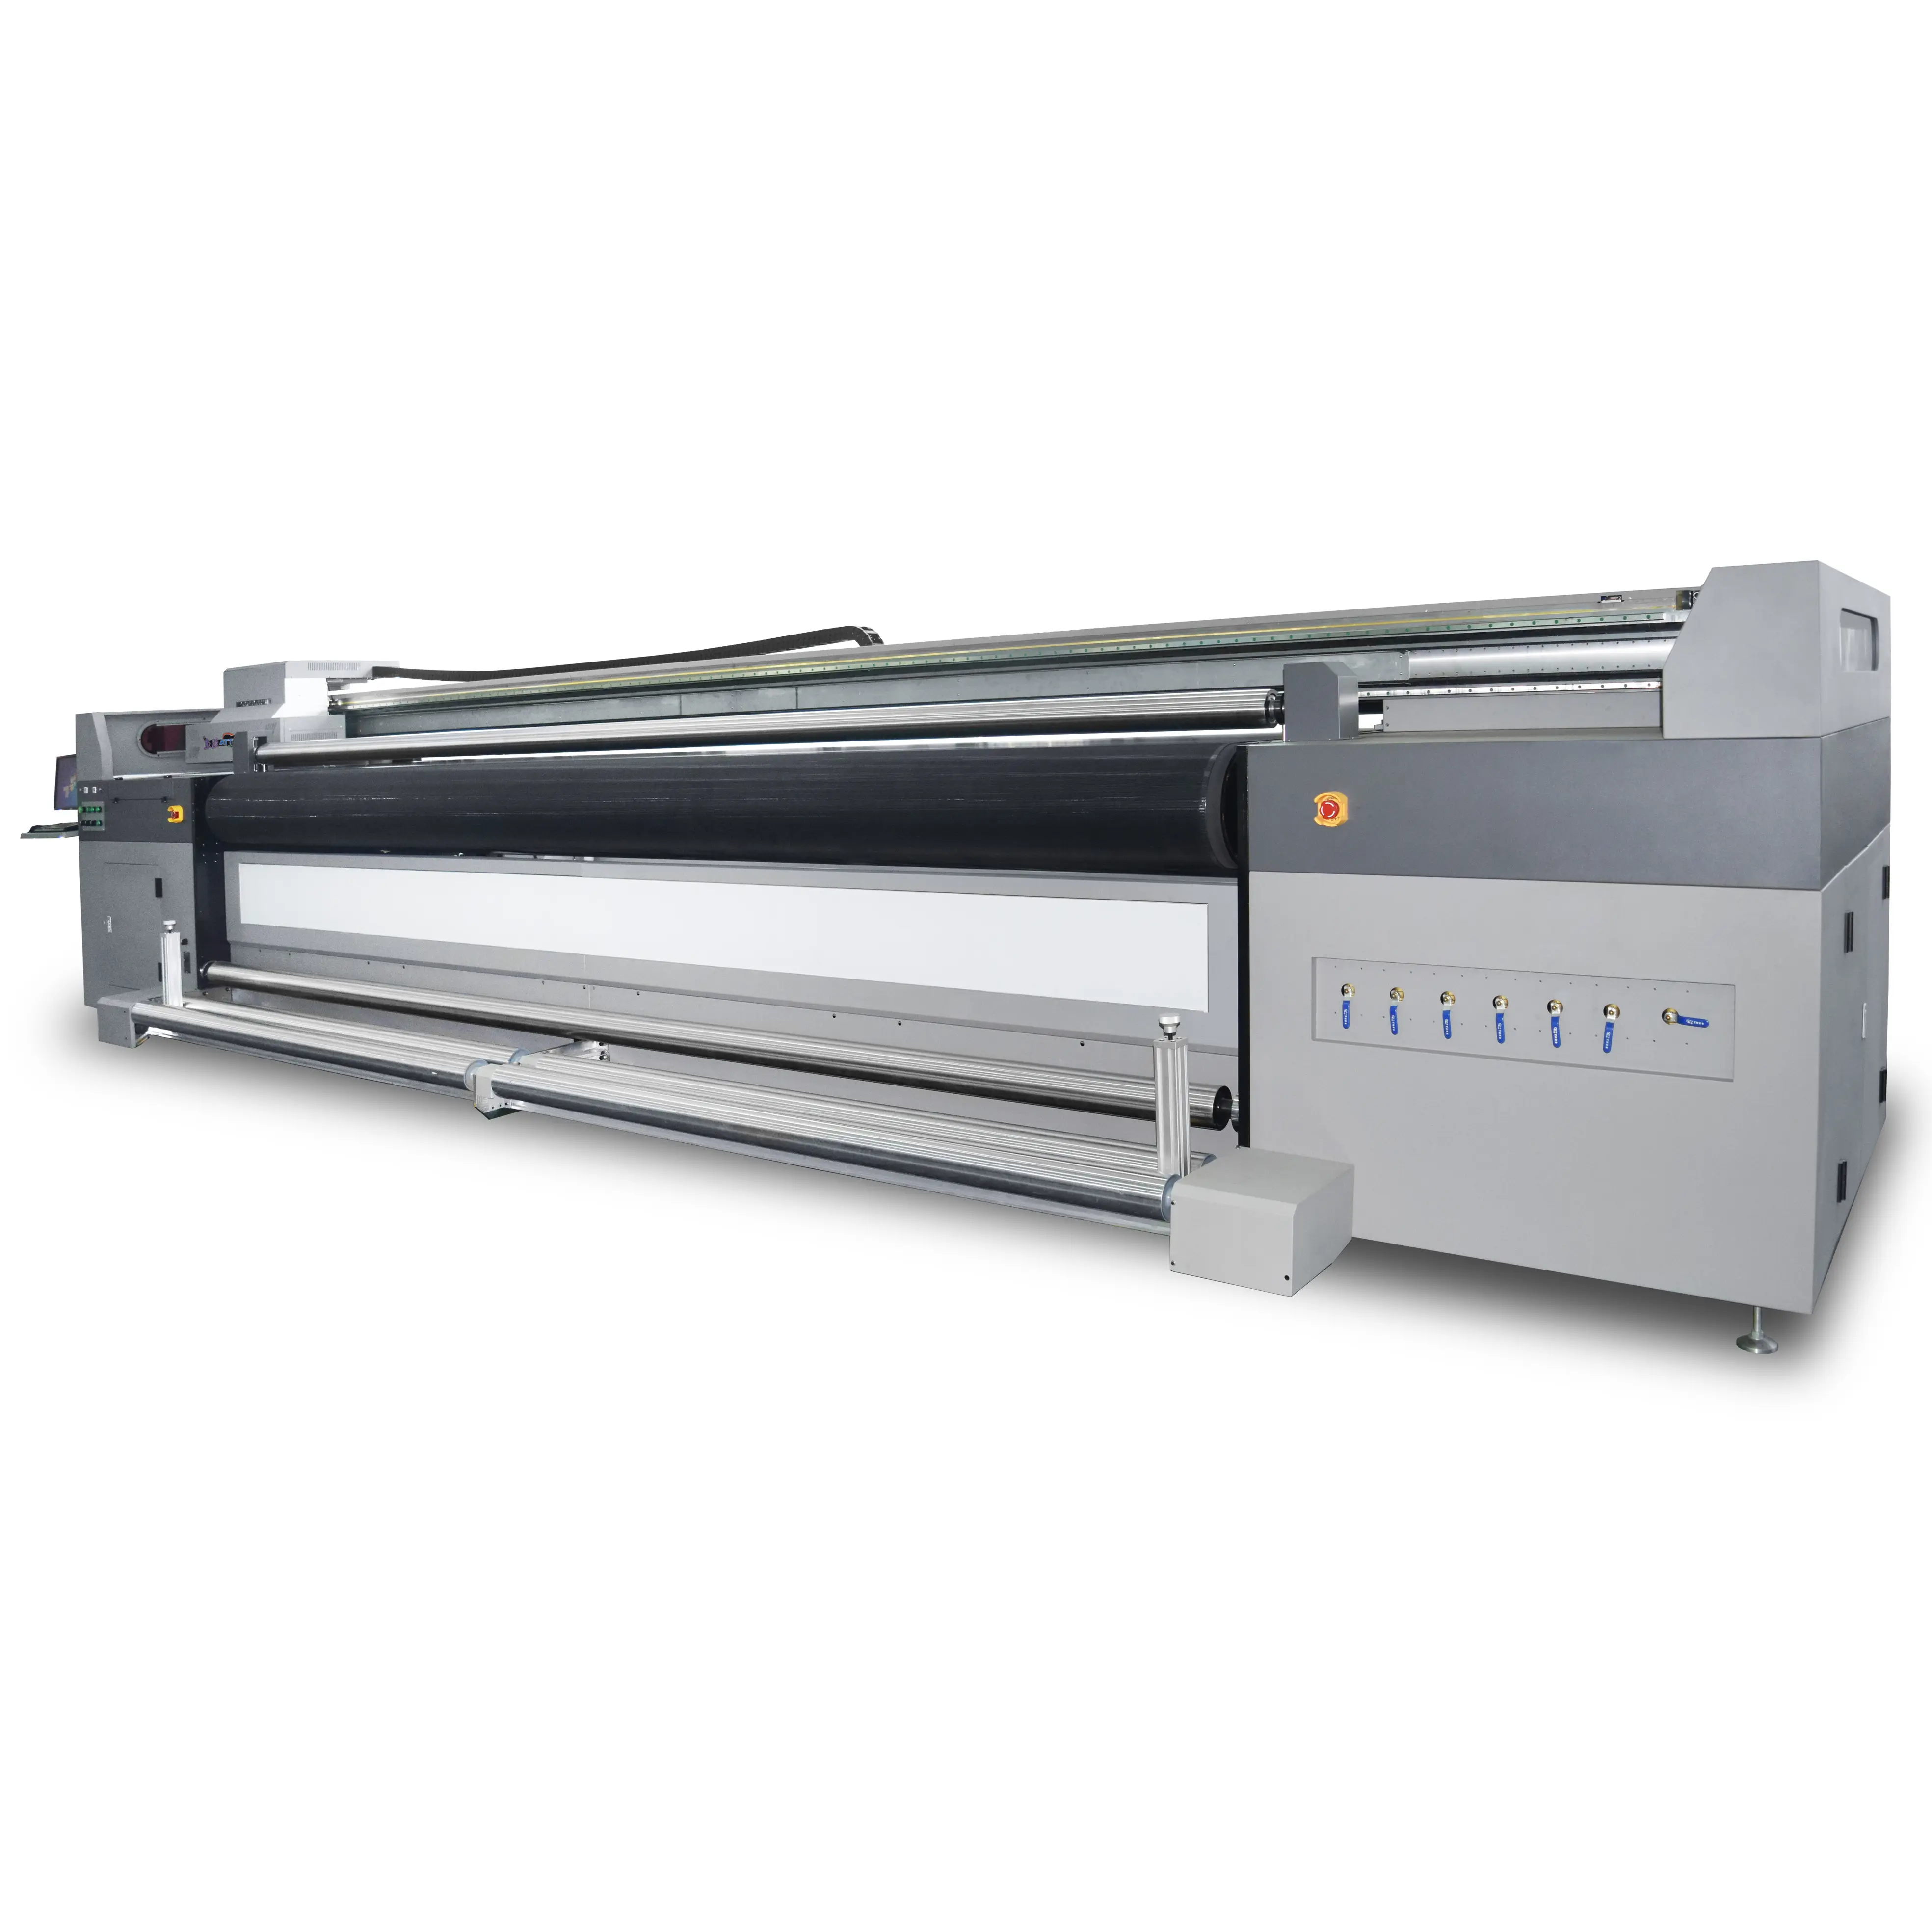 Nieuwste Yotta Printers Rolprinters Met 5000Mm Compatibel Met Kyocera Printkop Voor Inkjet Uv Printers